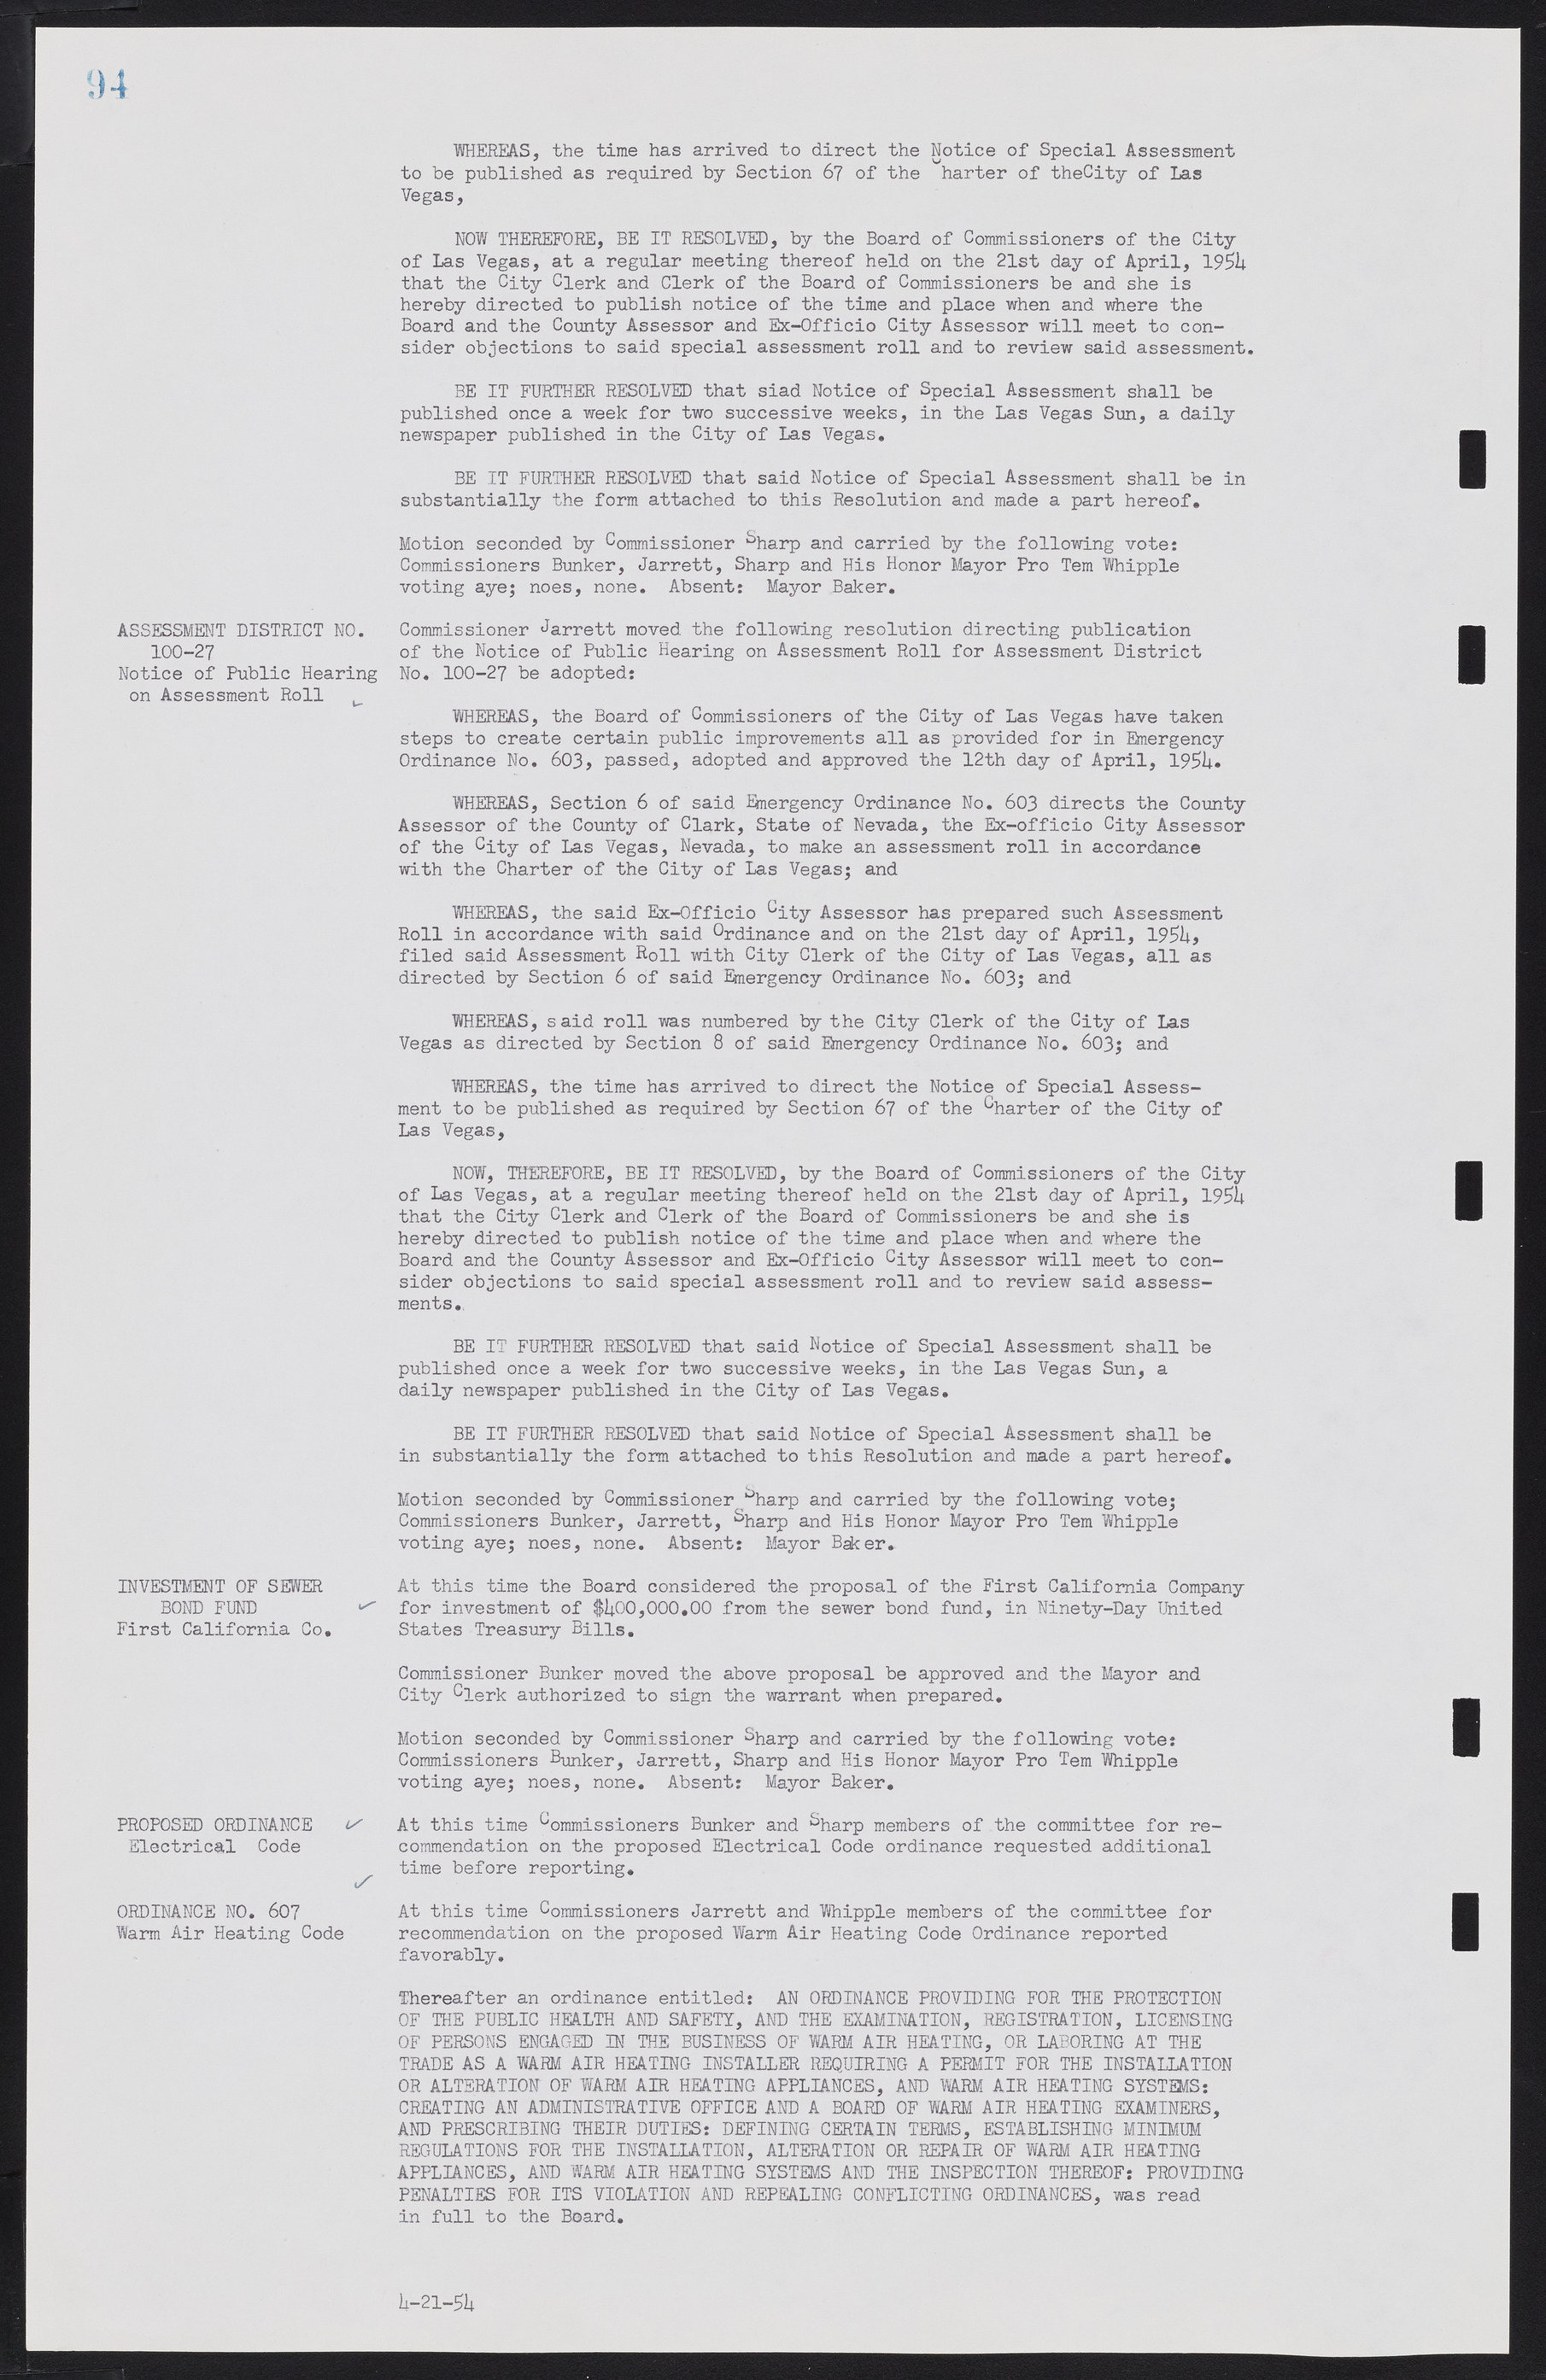 Las Vegas City Commission Minutes, February 17, 1954 to September 21, 1955, lvc000009-98